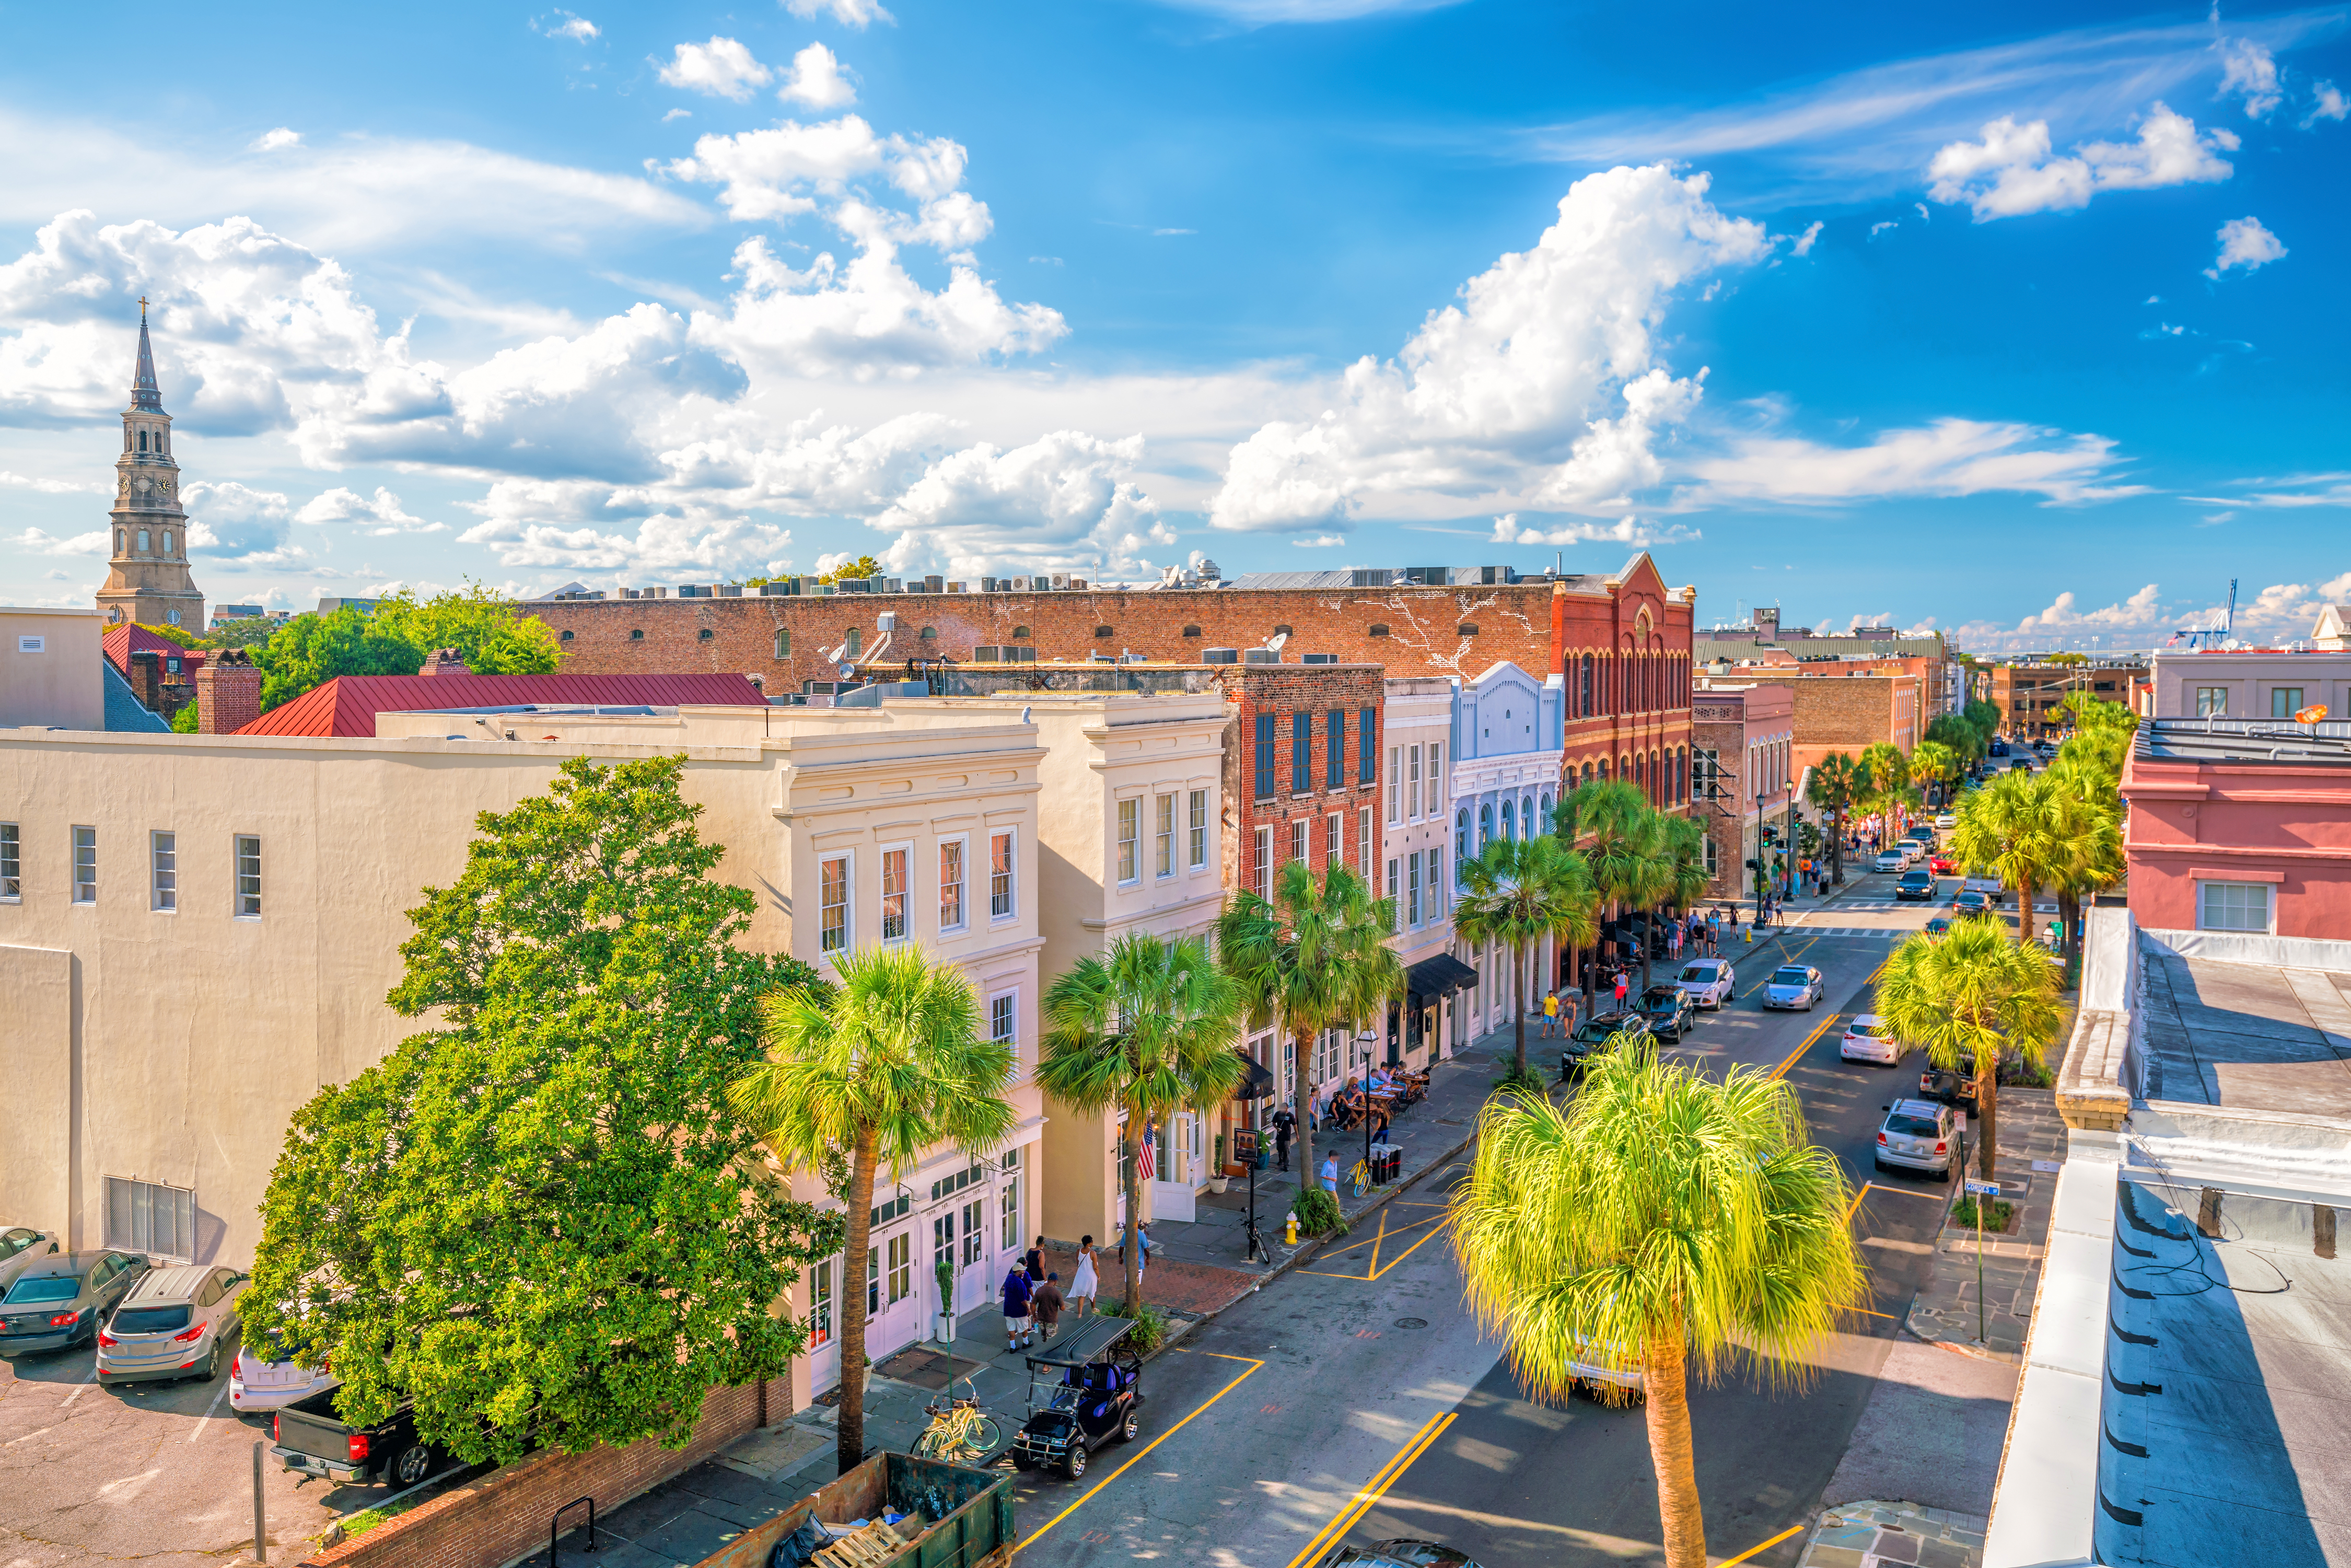 Historical downtown area of Charleston, South Carolina